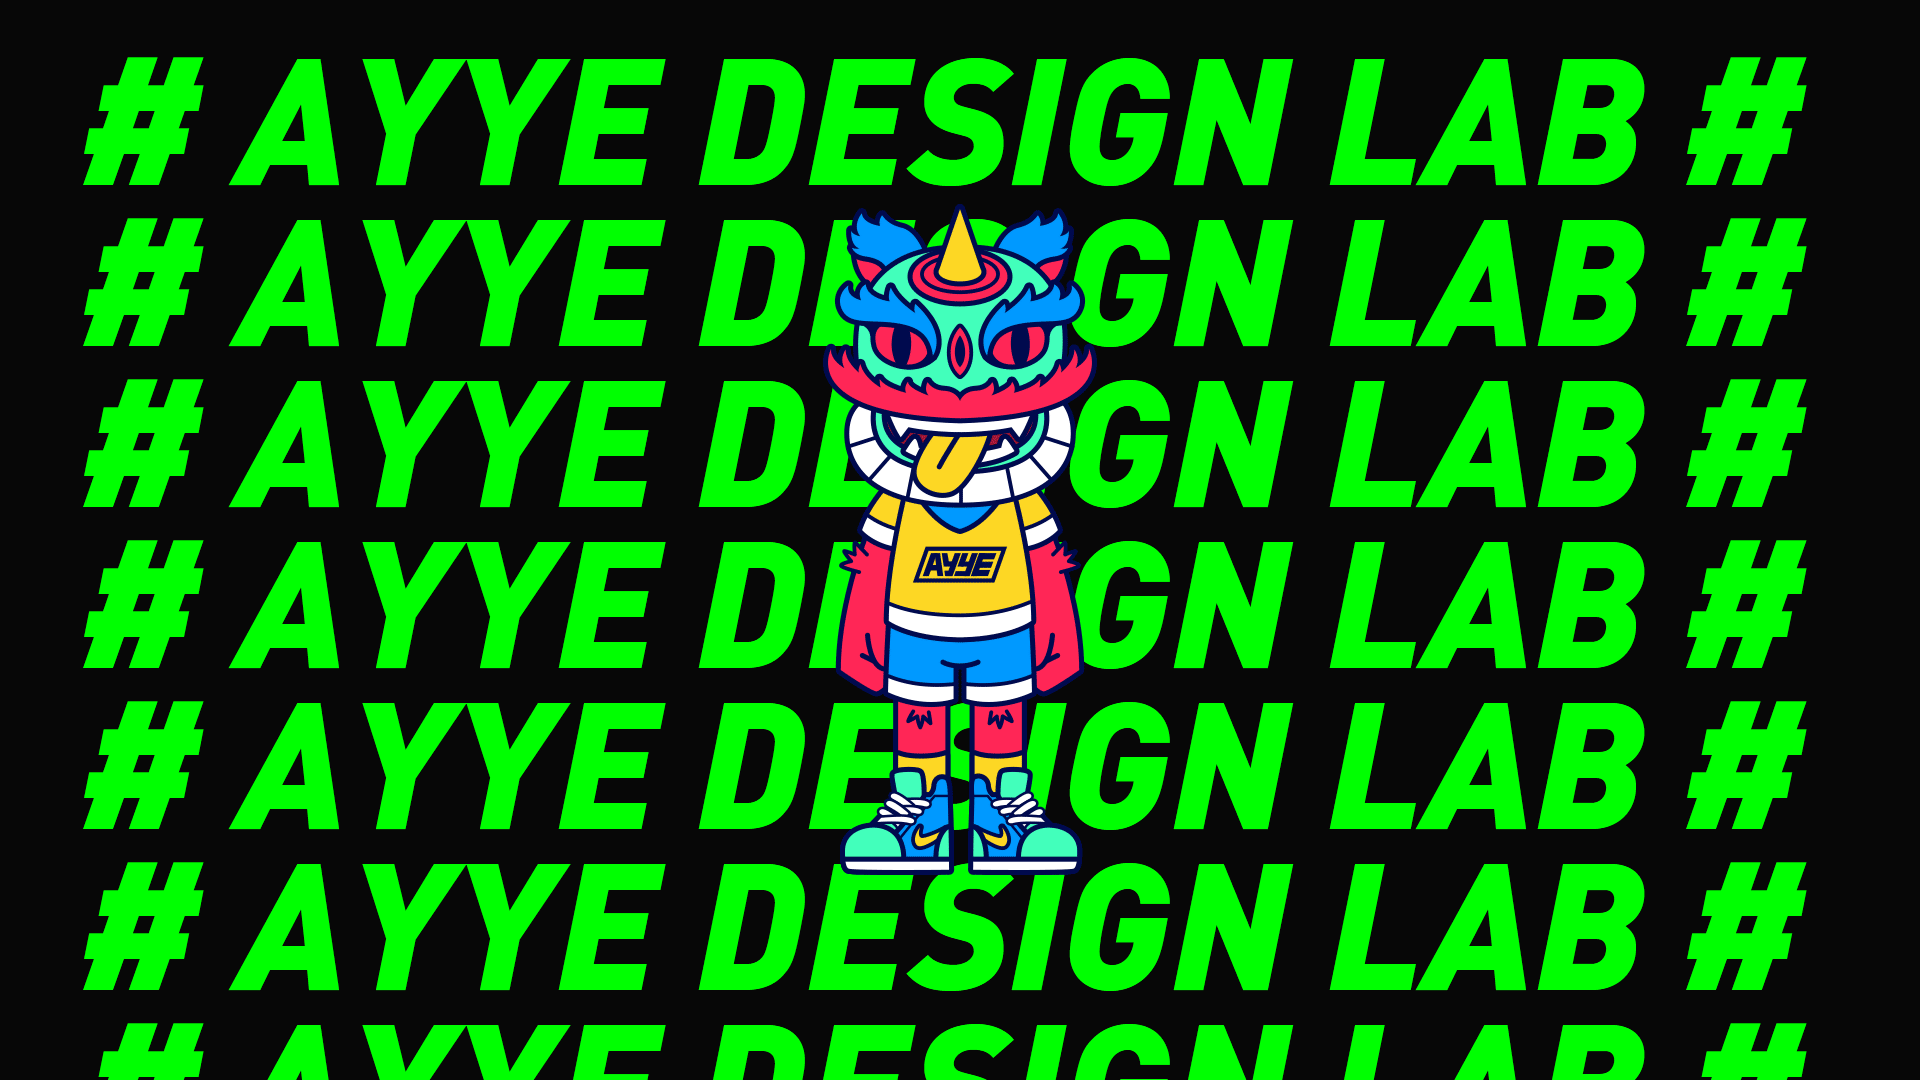 AYYE Brand design